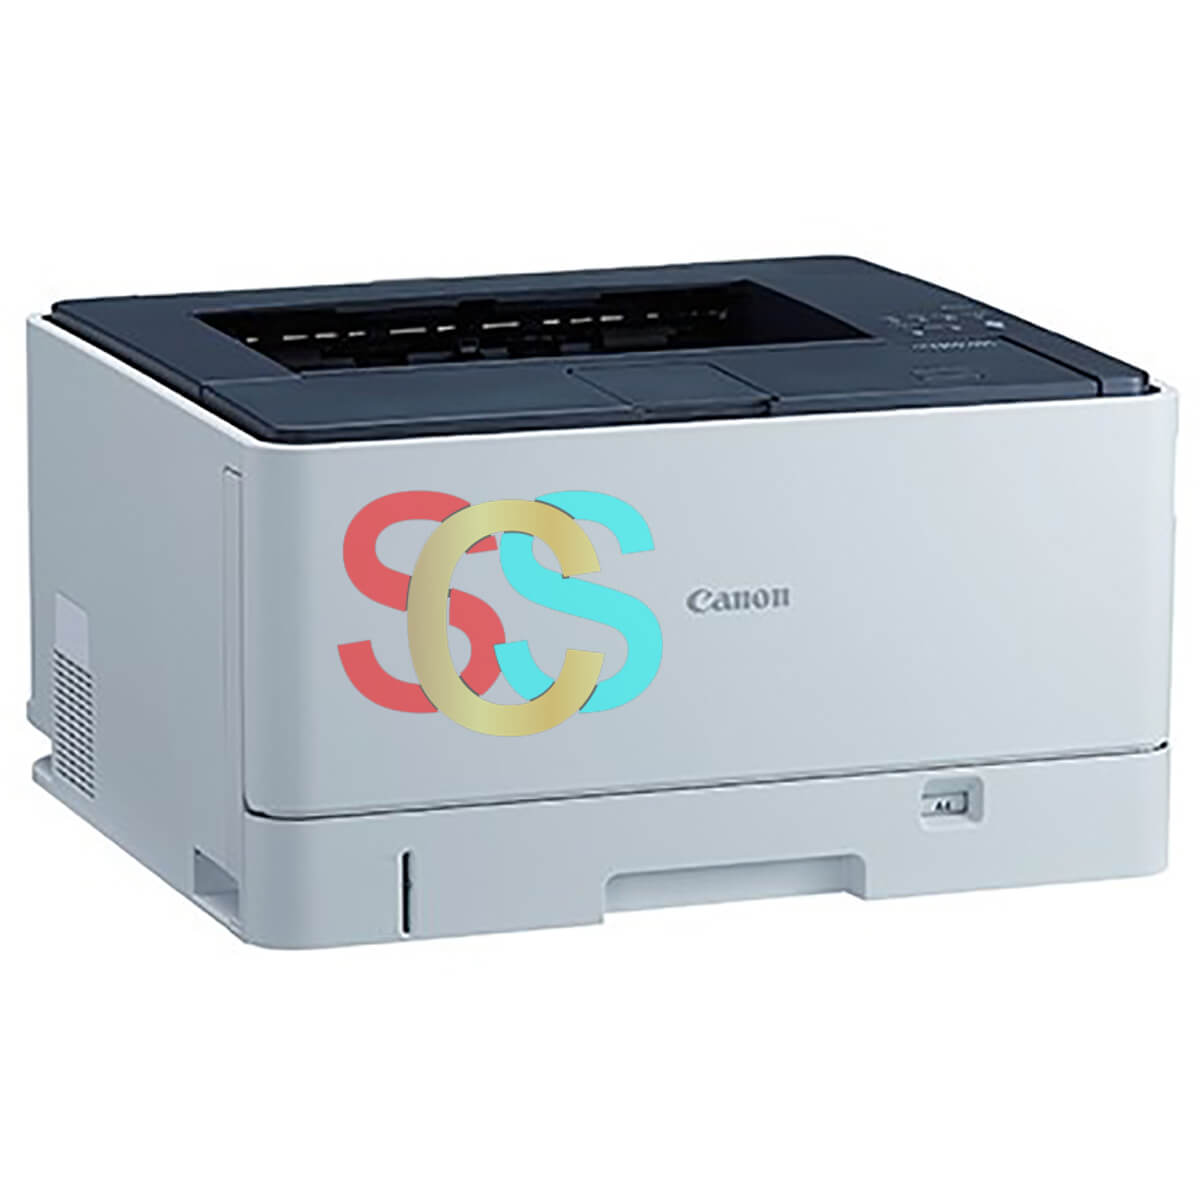 Canon imageCLASS LBP8100n Single Function Mono Laser Printer